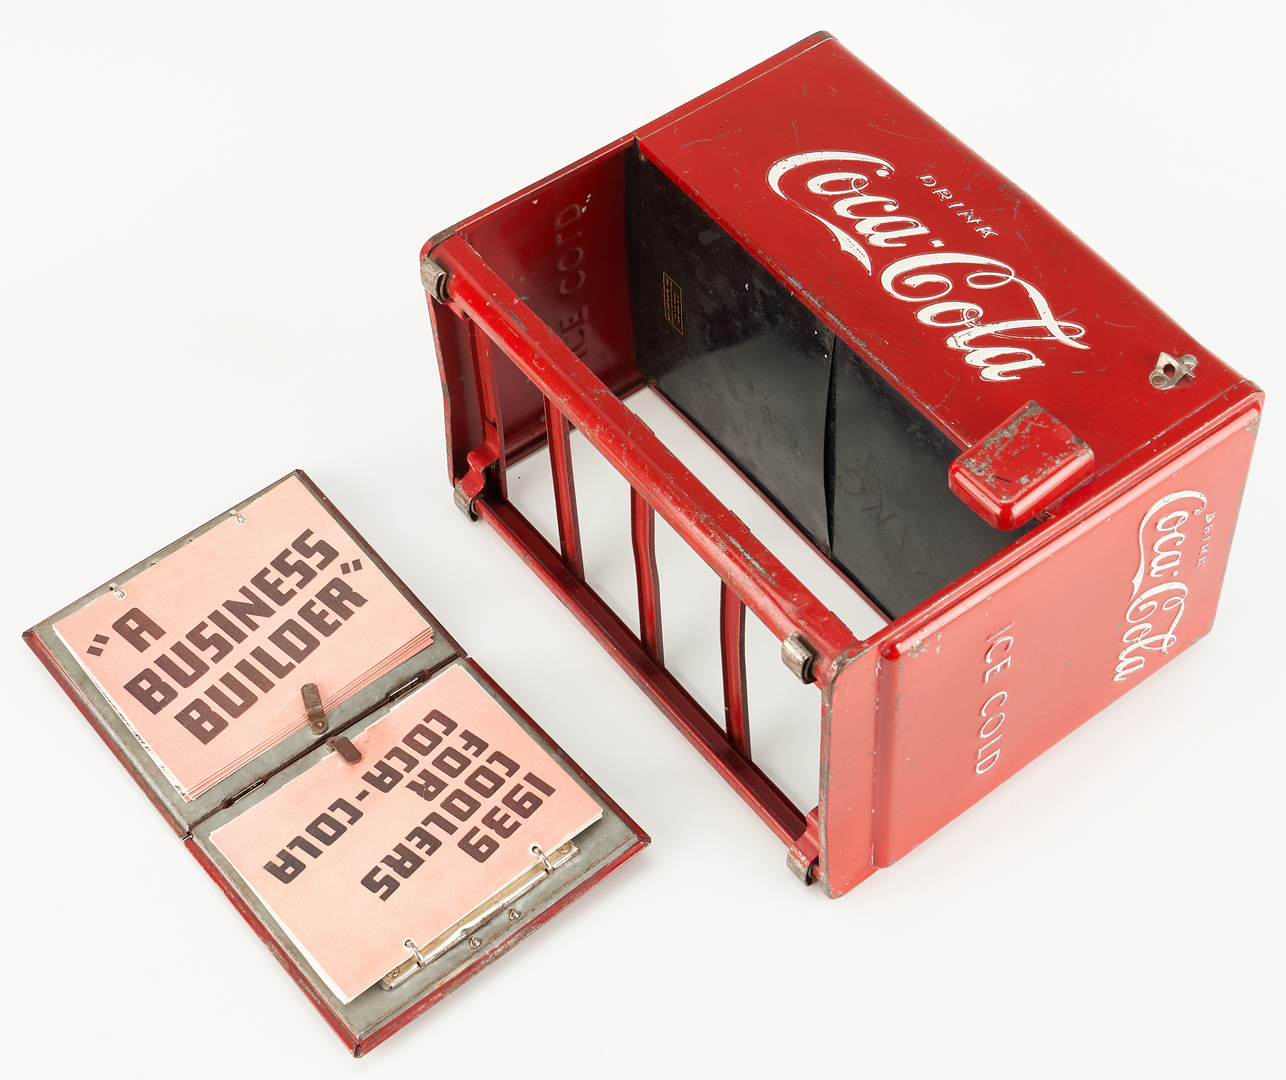 Lot 842: 1939 Coca Cola Salesman Sample Cooler